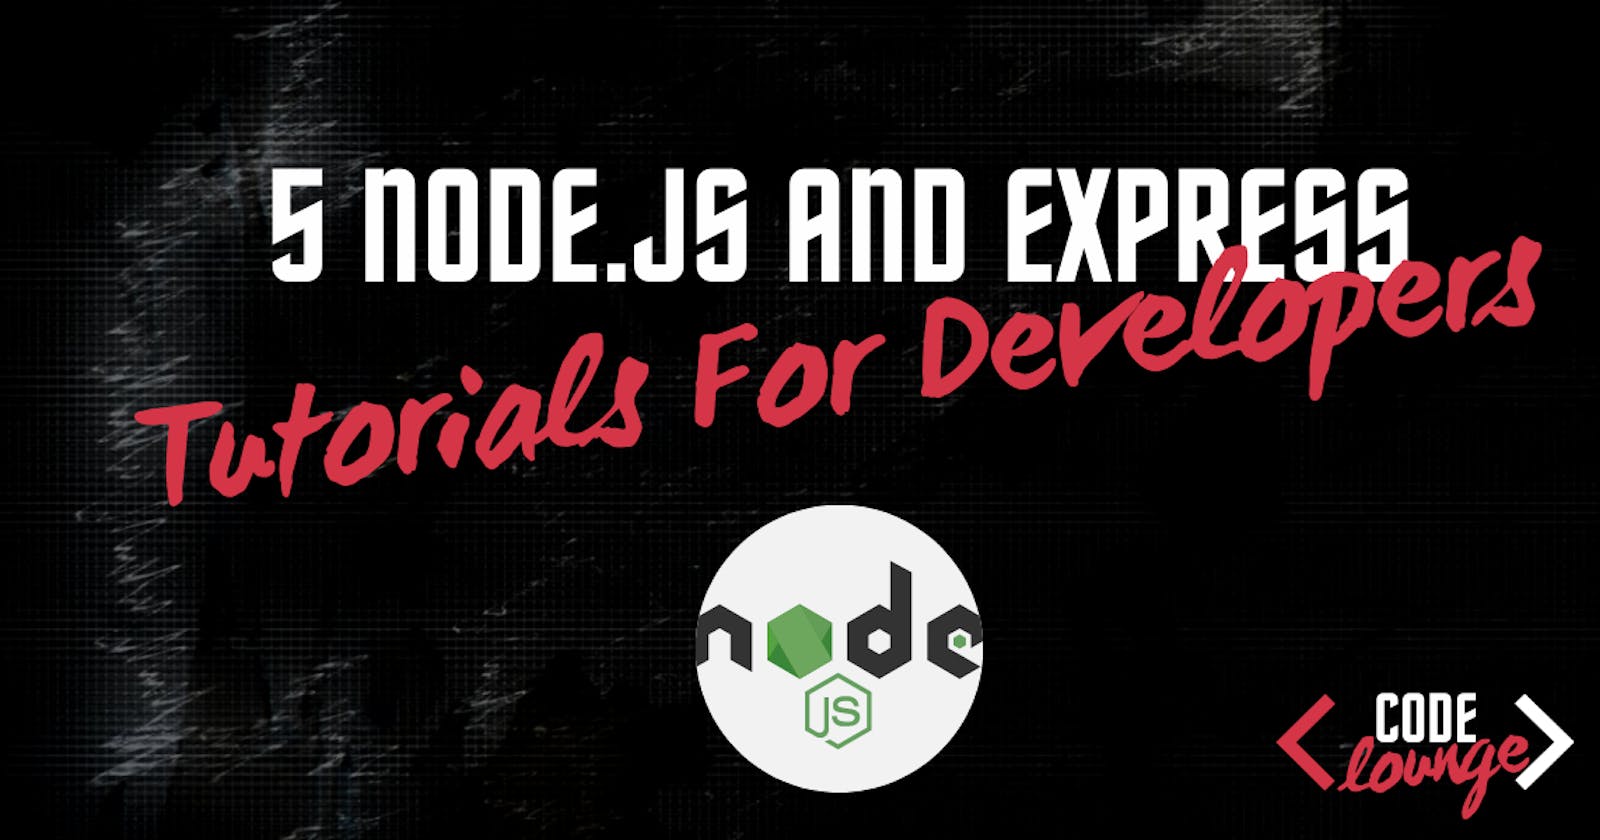 Top 5 Node.js/Express Tutorials For Beginners And Advanced Programmers